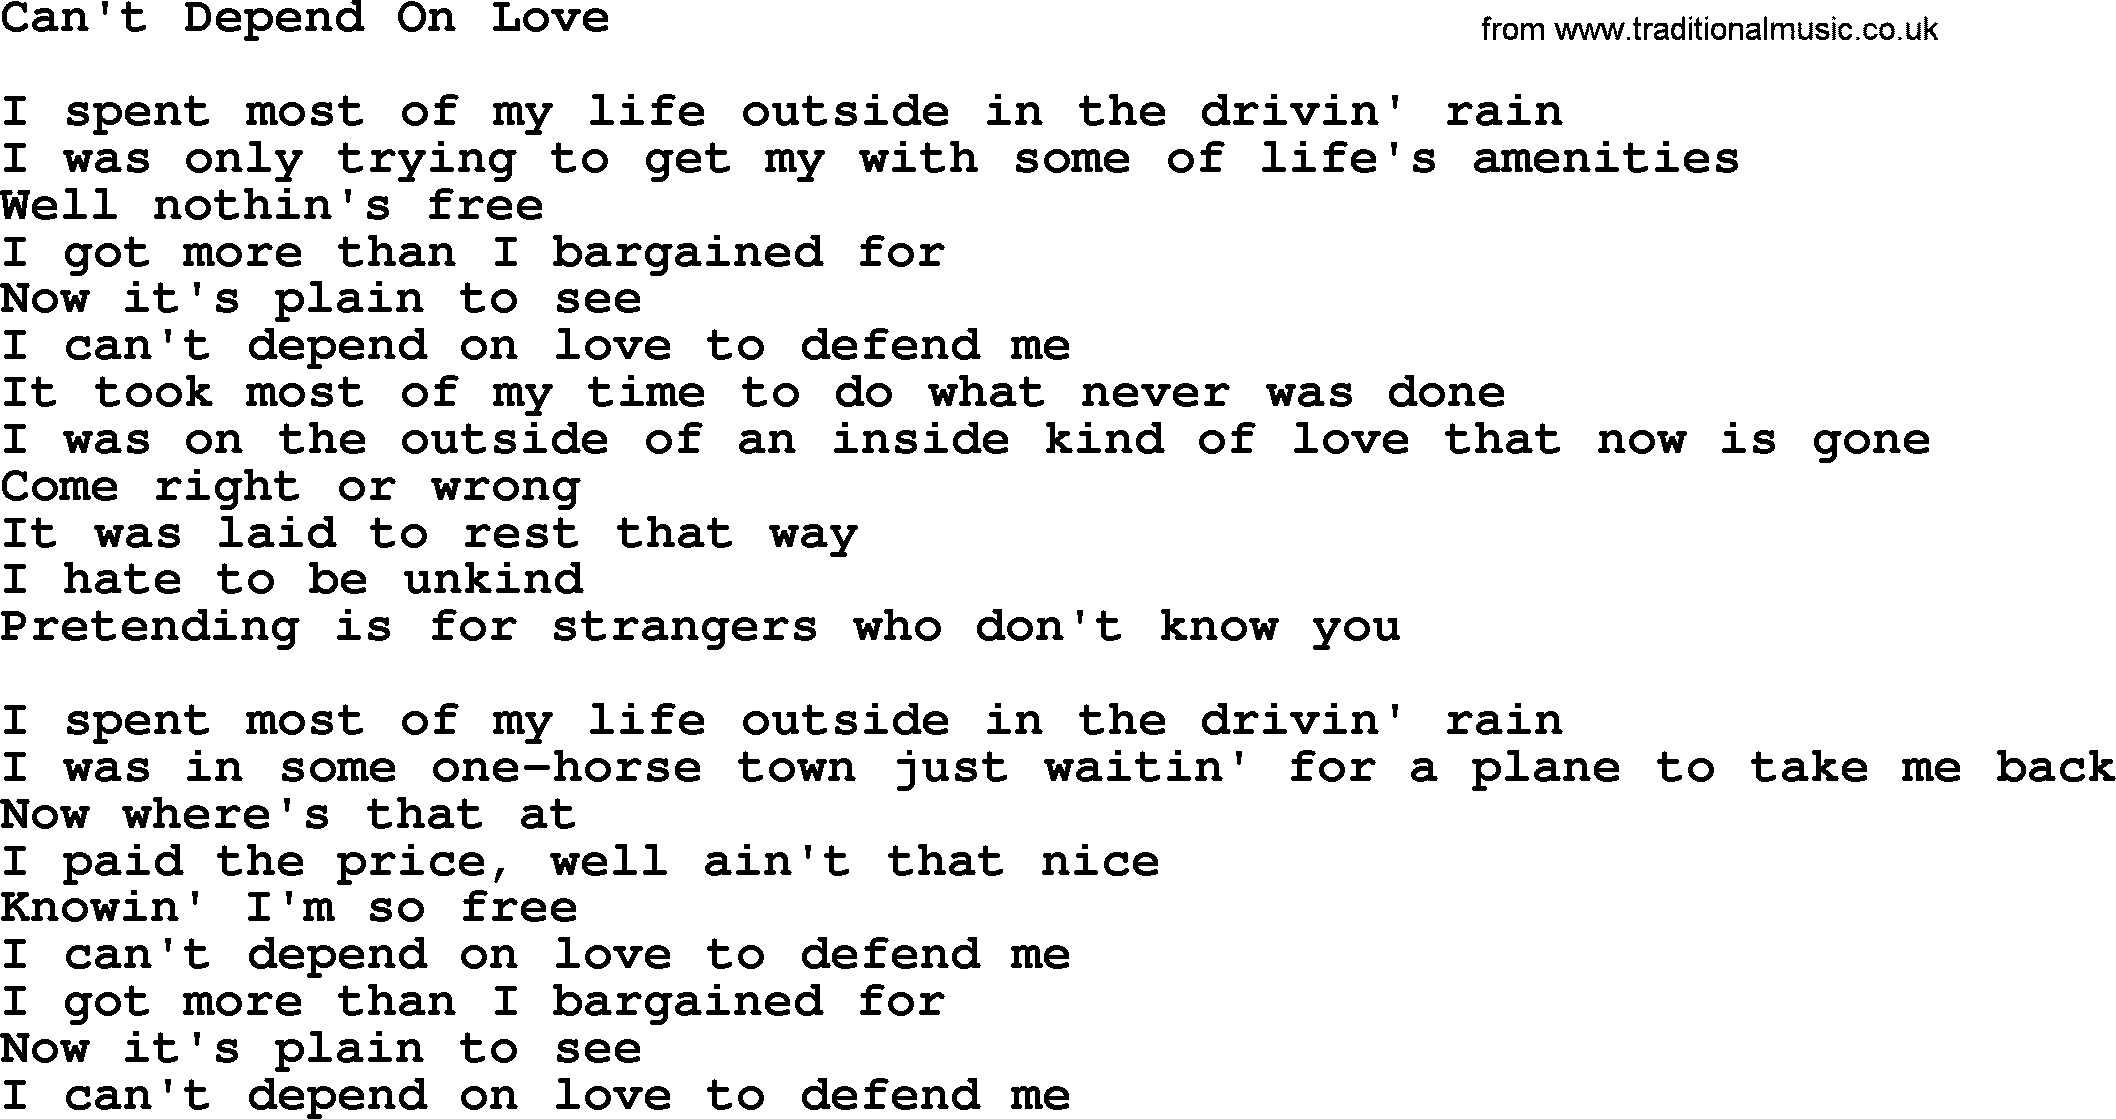 Gordon Lightfoot song Can't Depend On Love, lyrics